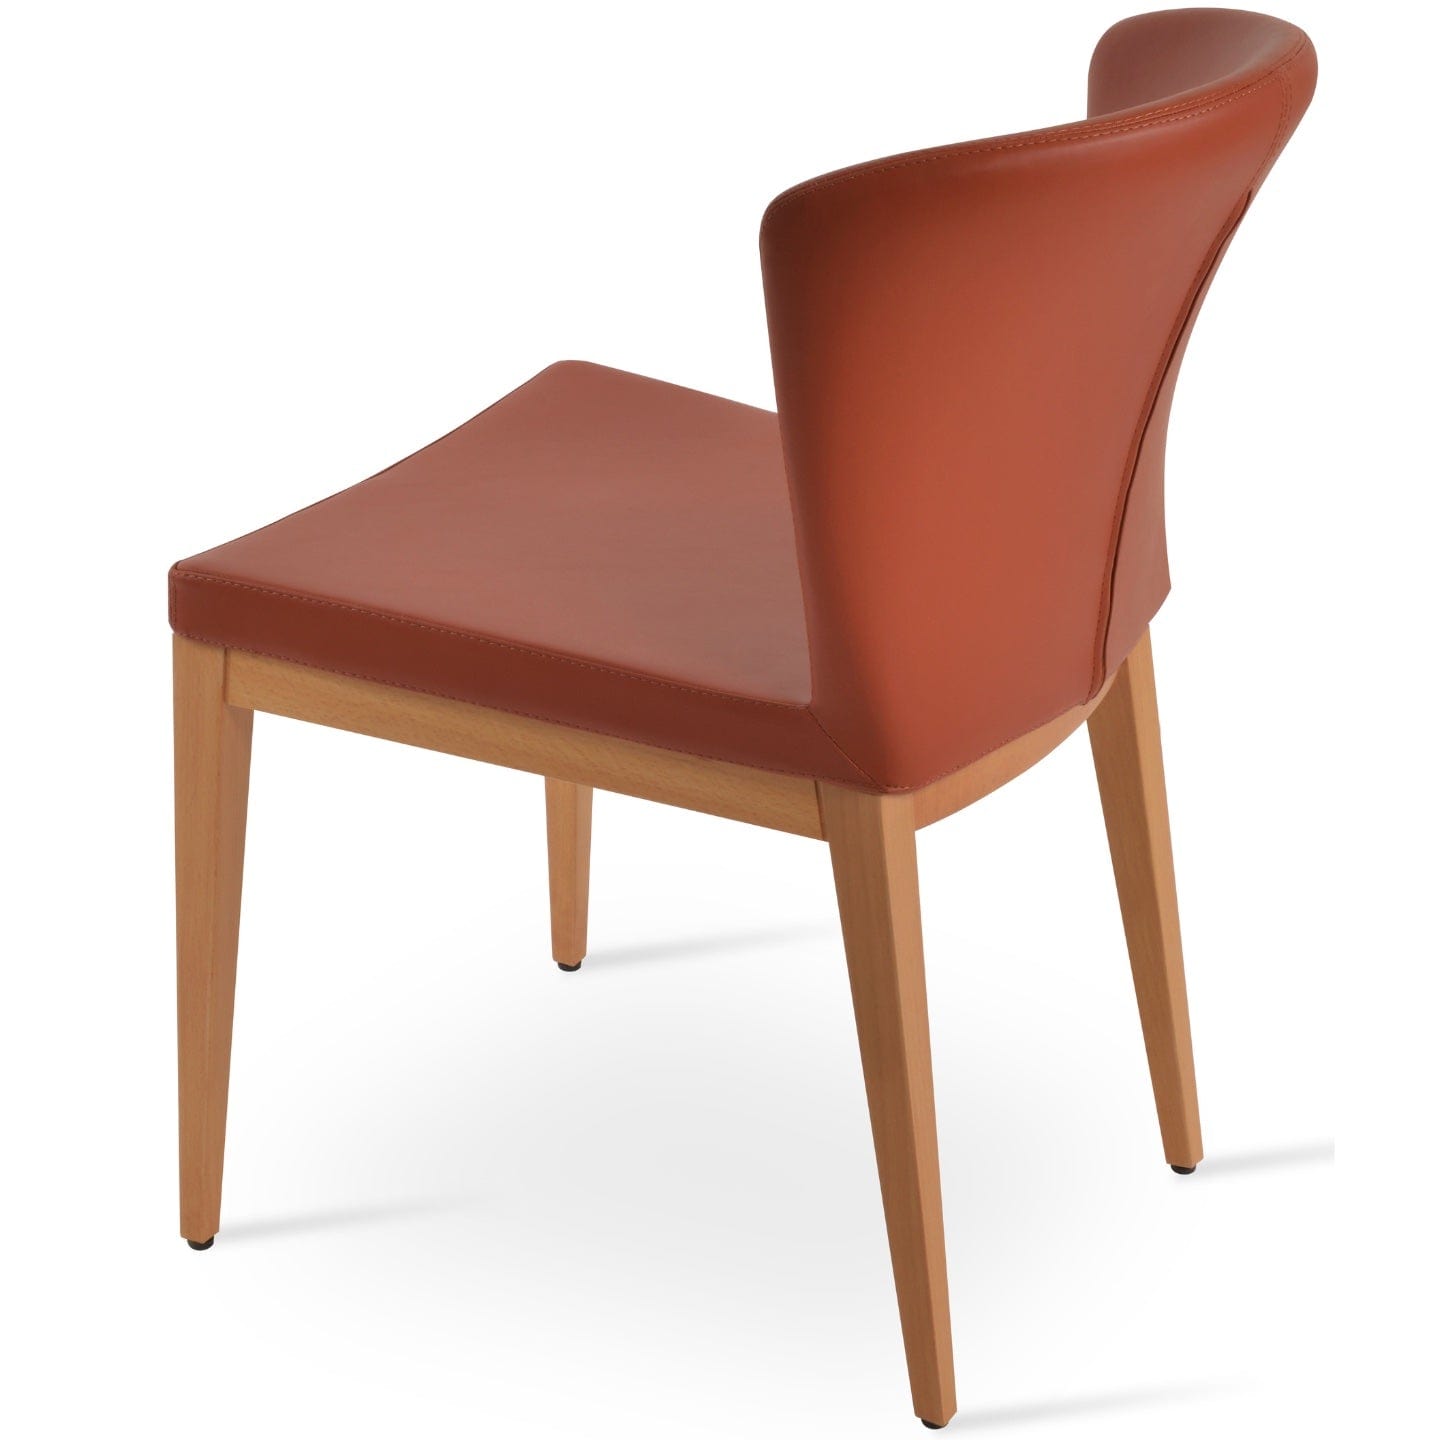 sohoConcept Kitchen & Dining Room Chairs Capri Wood Chairs | Brown Leather Wooden Dining Chairs